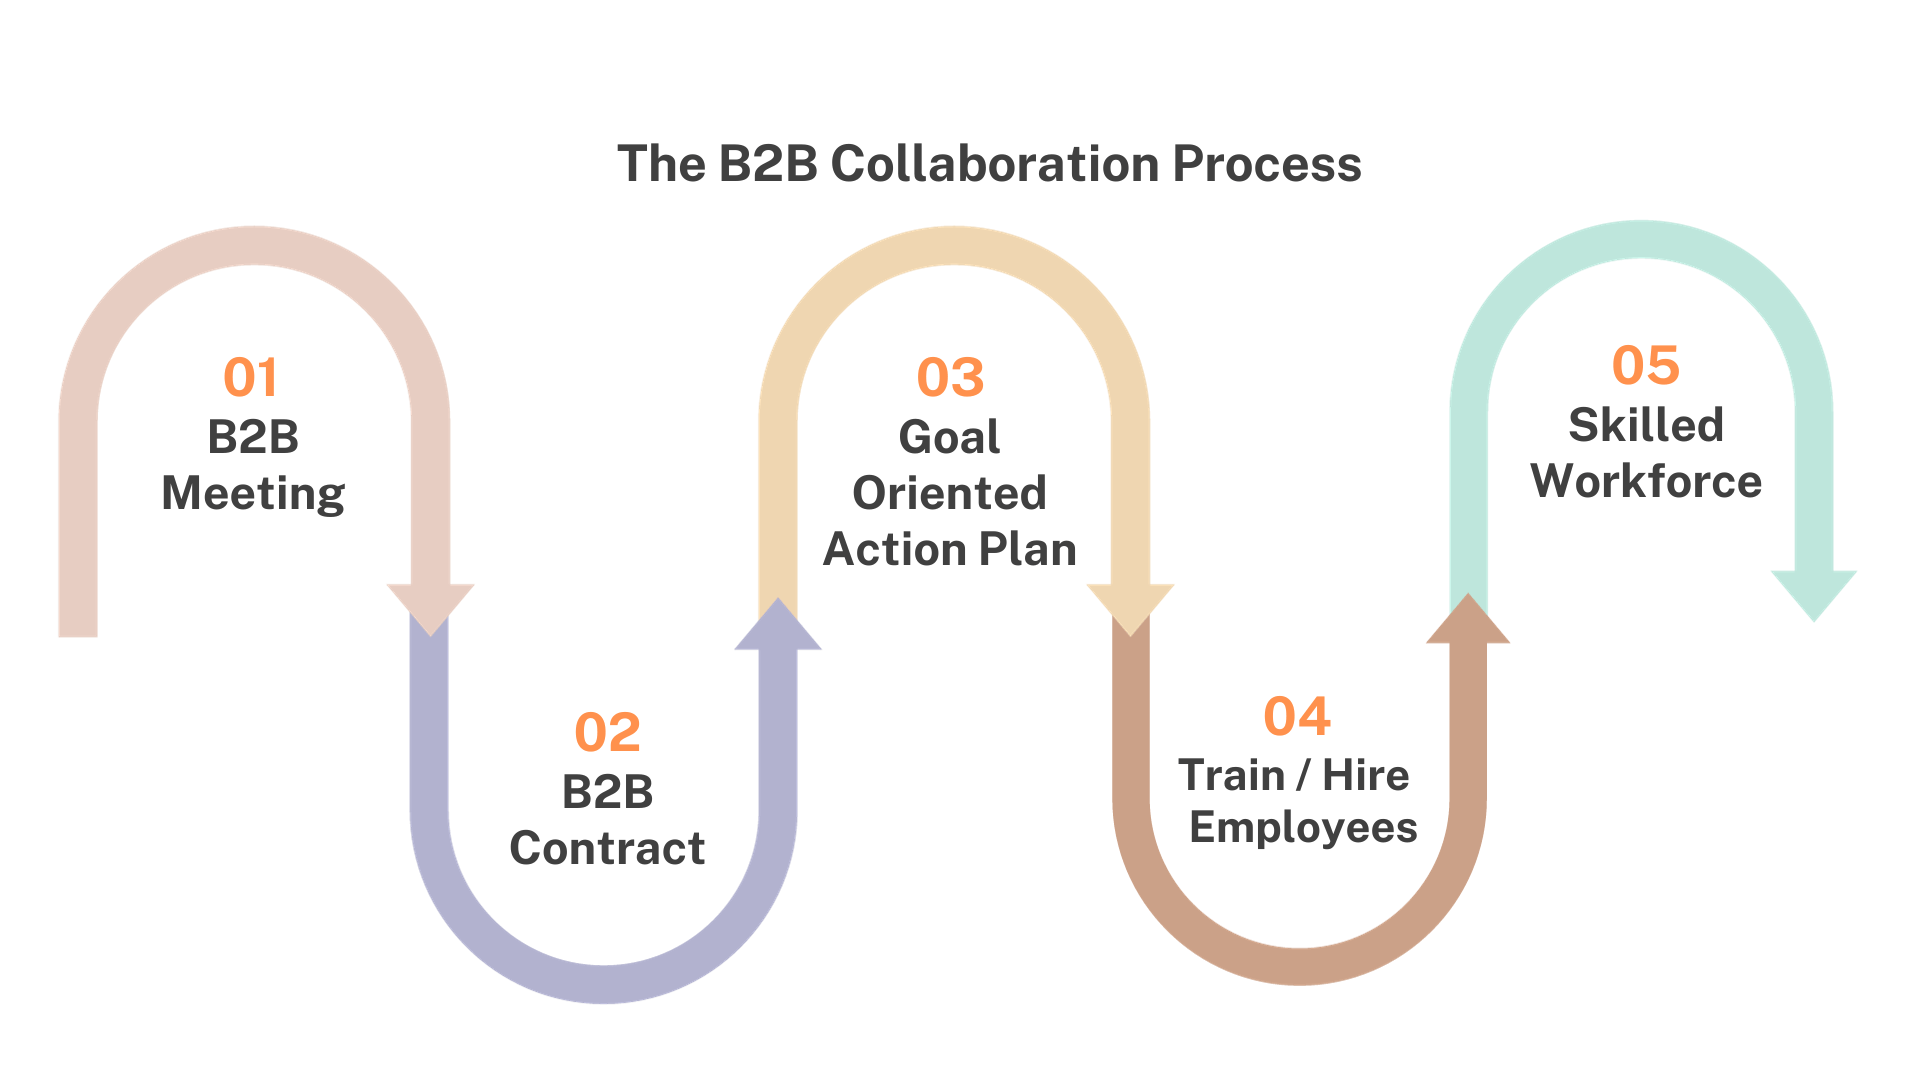 The B2B collaboration process